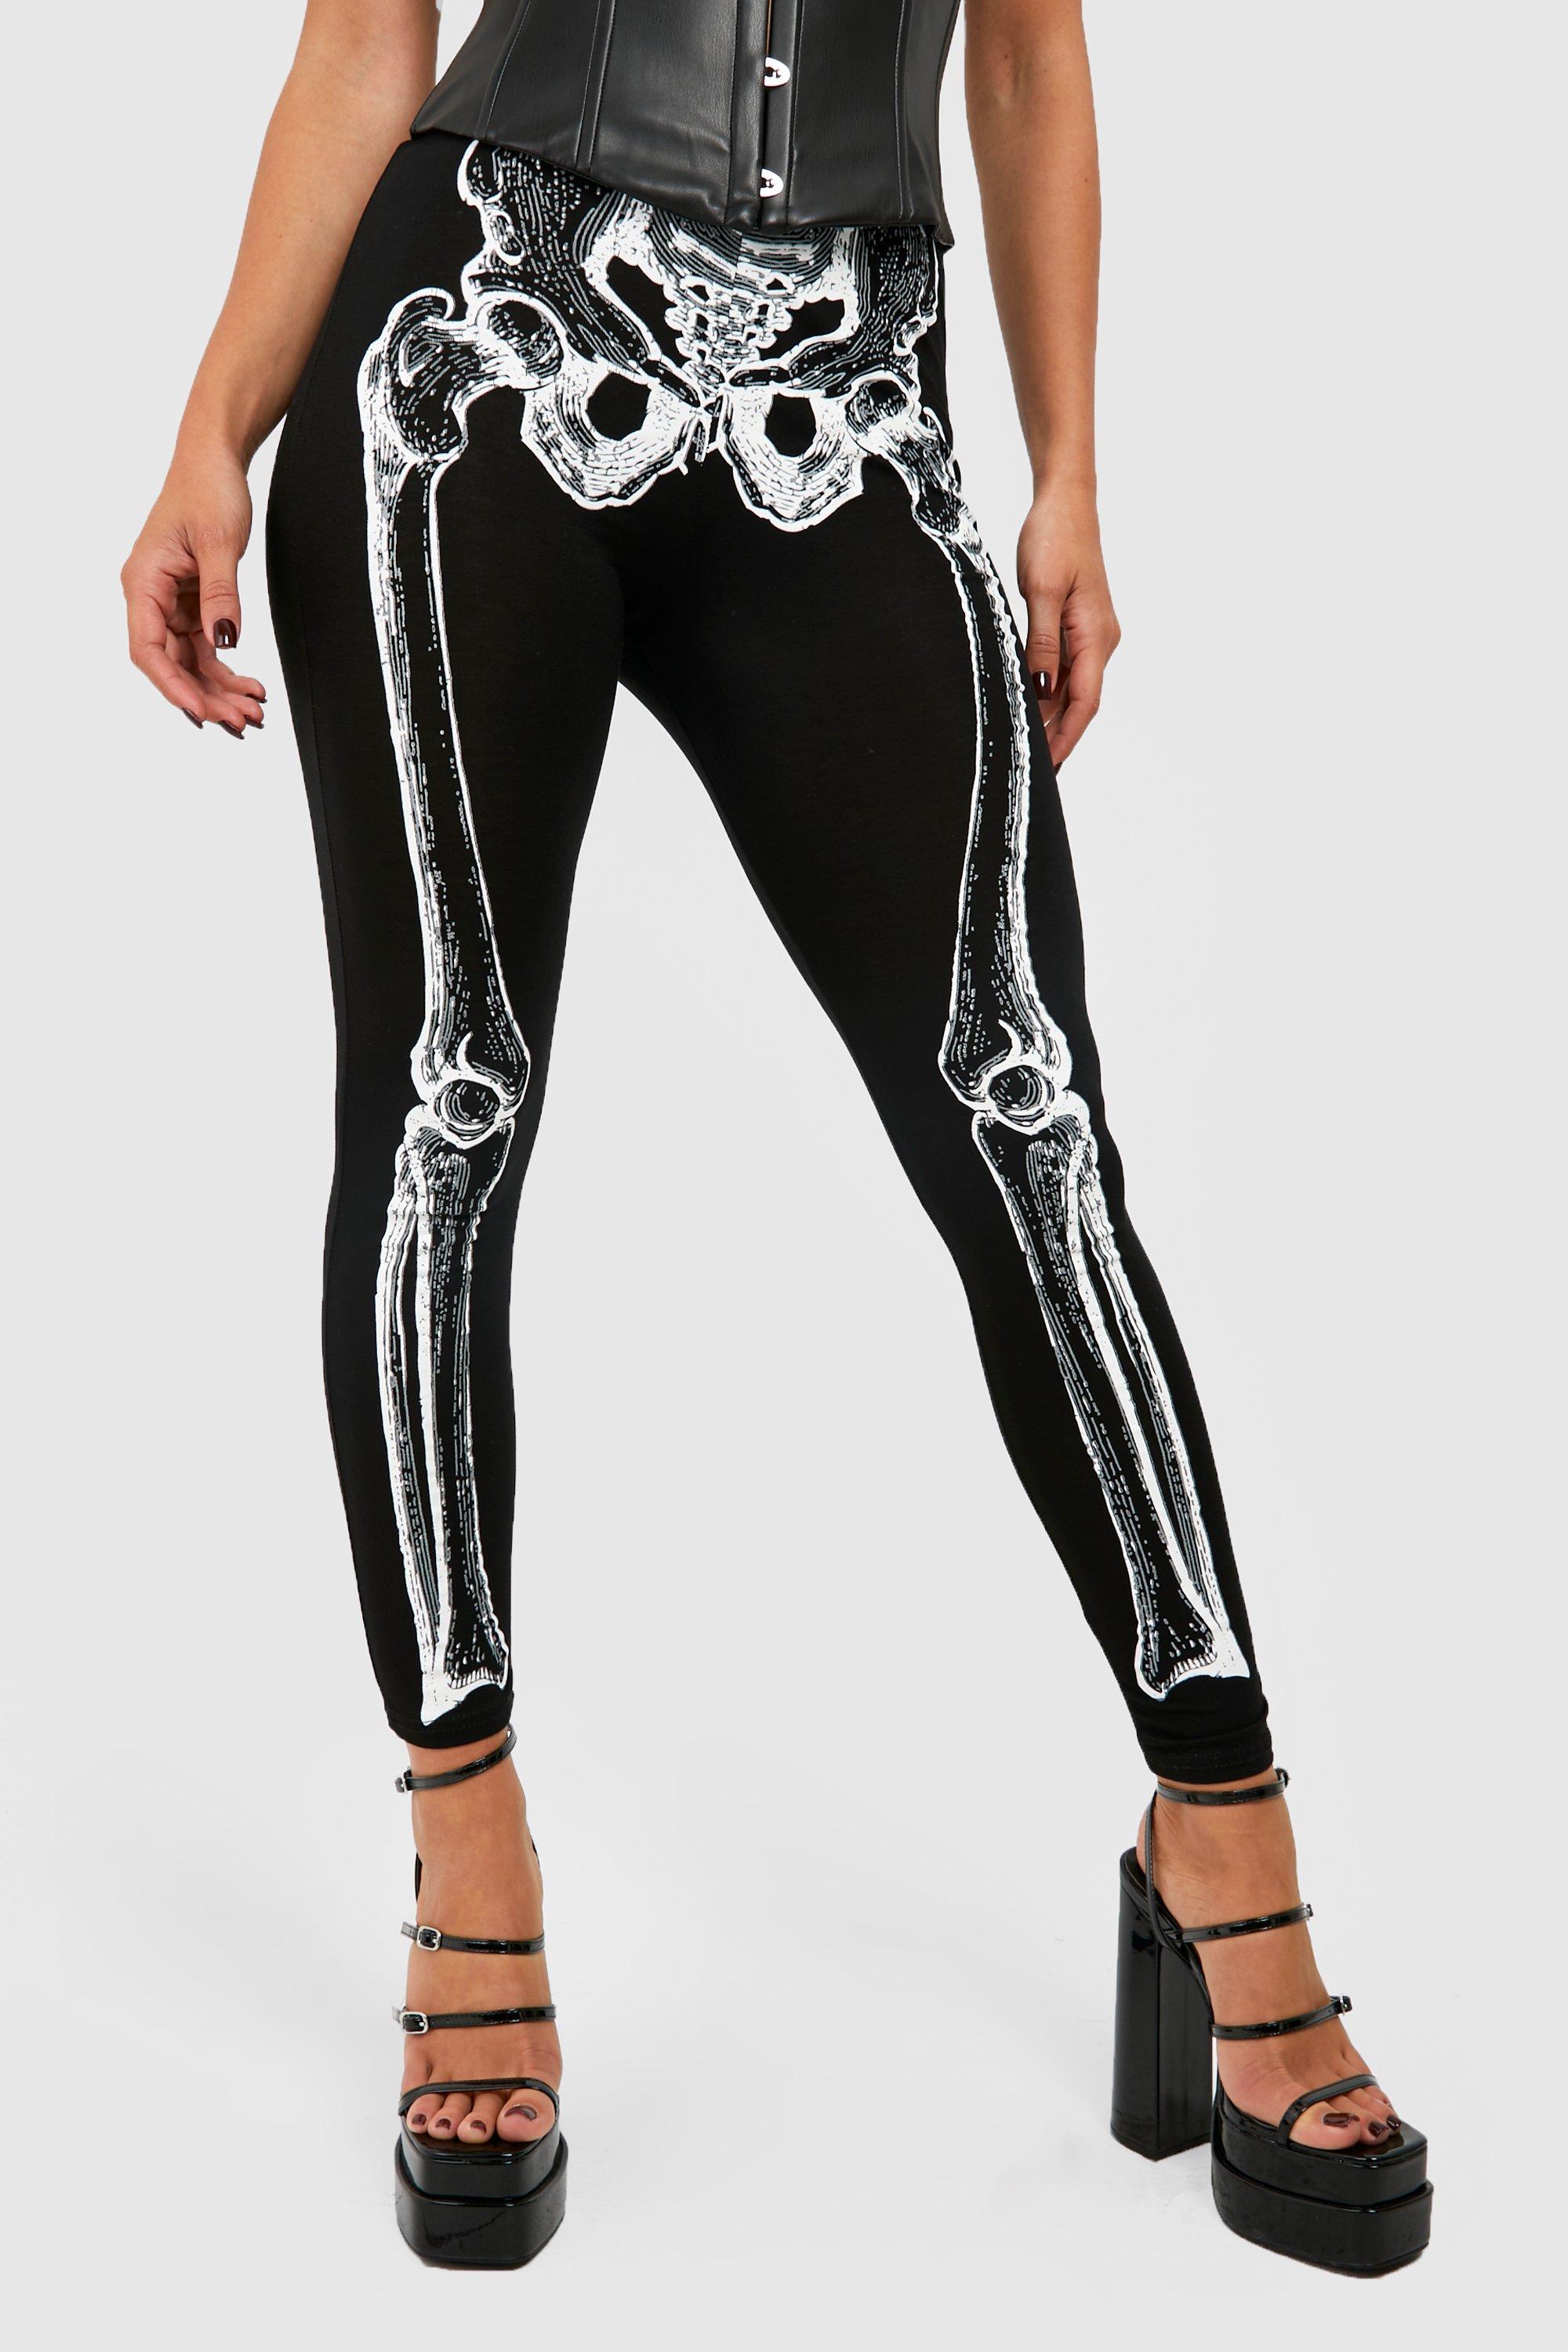 https://media.boohoo.com/i/boohoo/gzz35922_black_xl_3/female-black-halloween-skeleton-printed-high-waisted-leggings